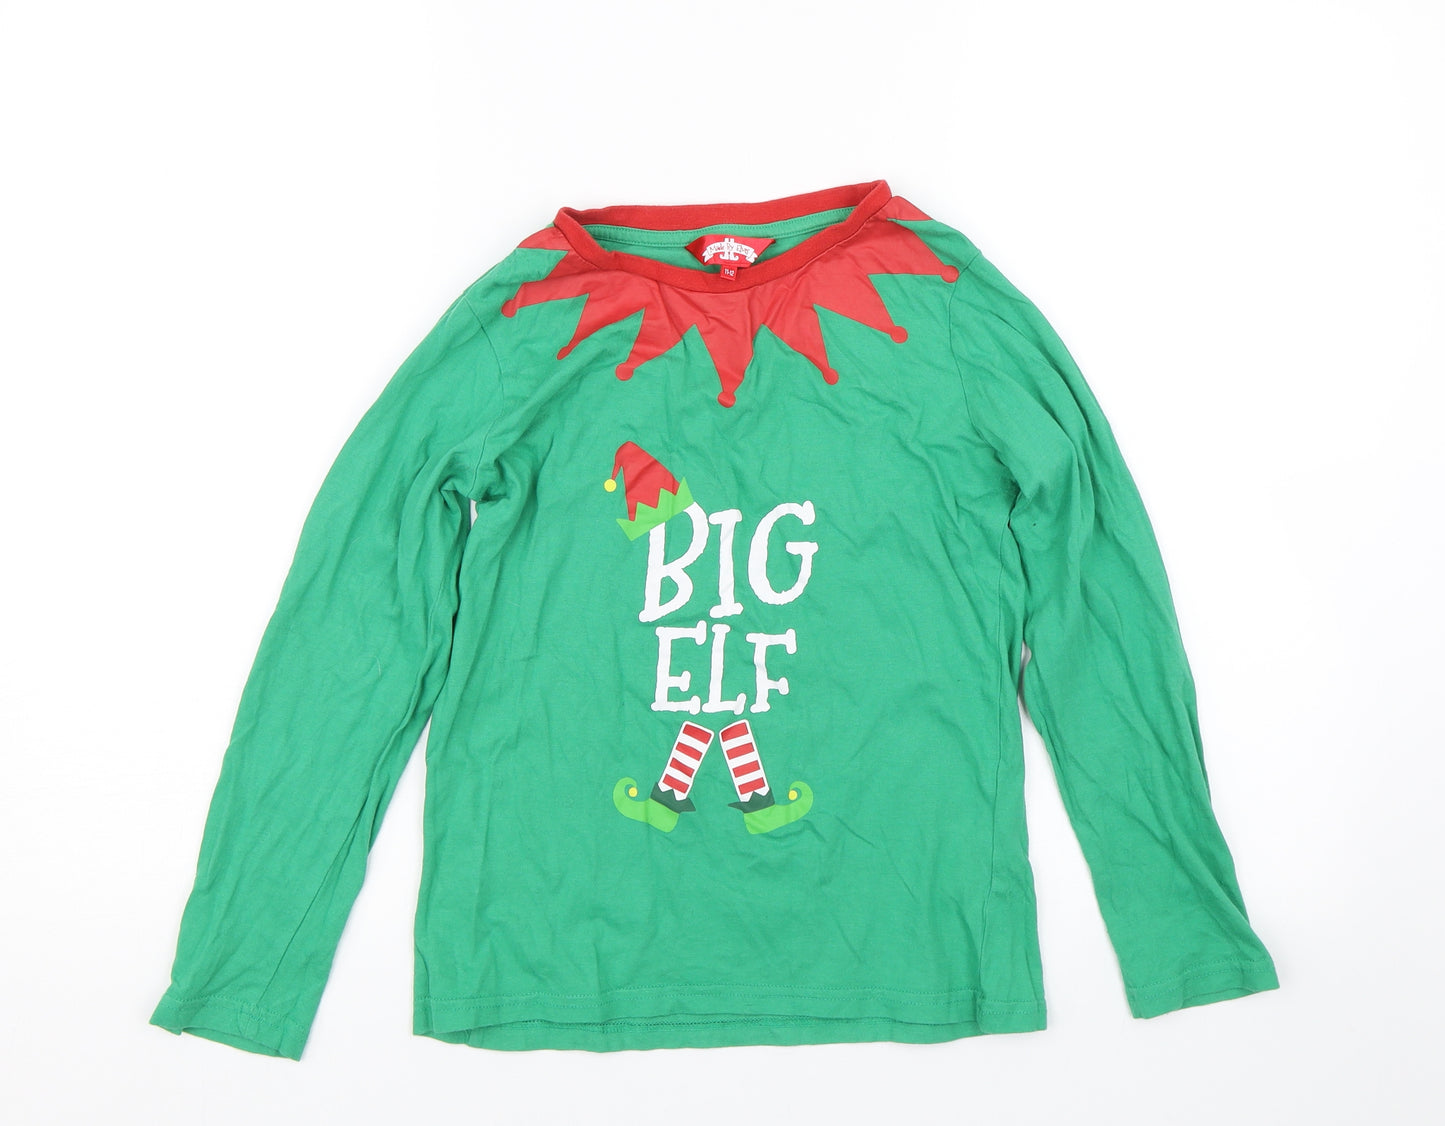 Made By Elves Boys Green    Pyjama Top Size 11-12 Years  - Big Elf